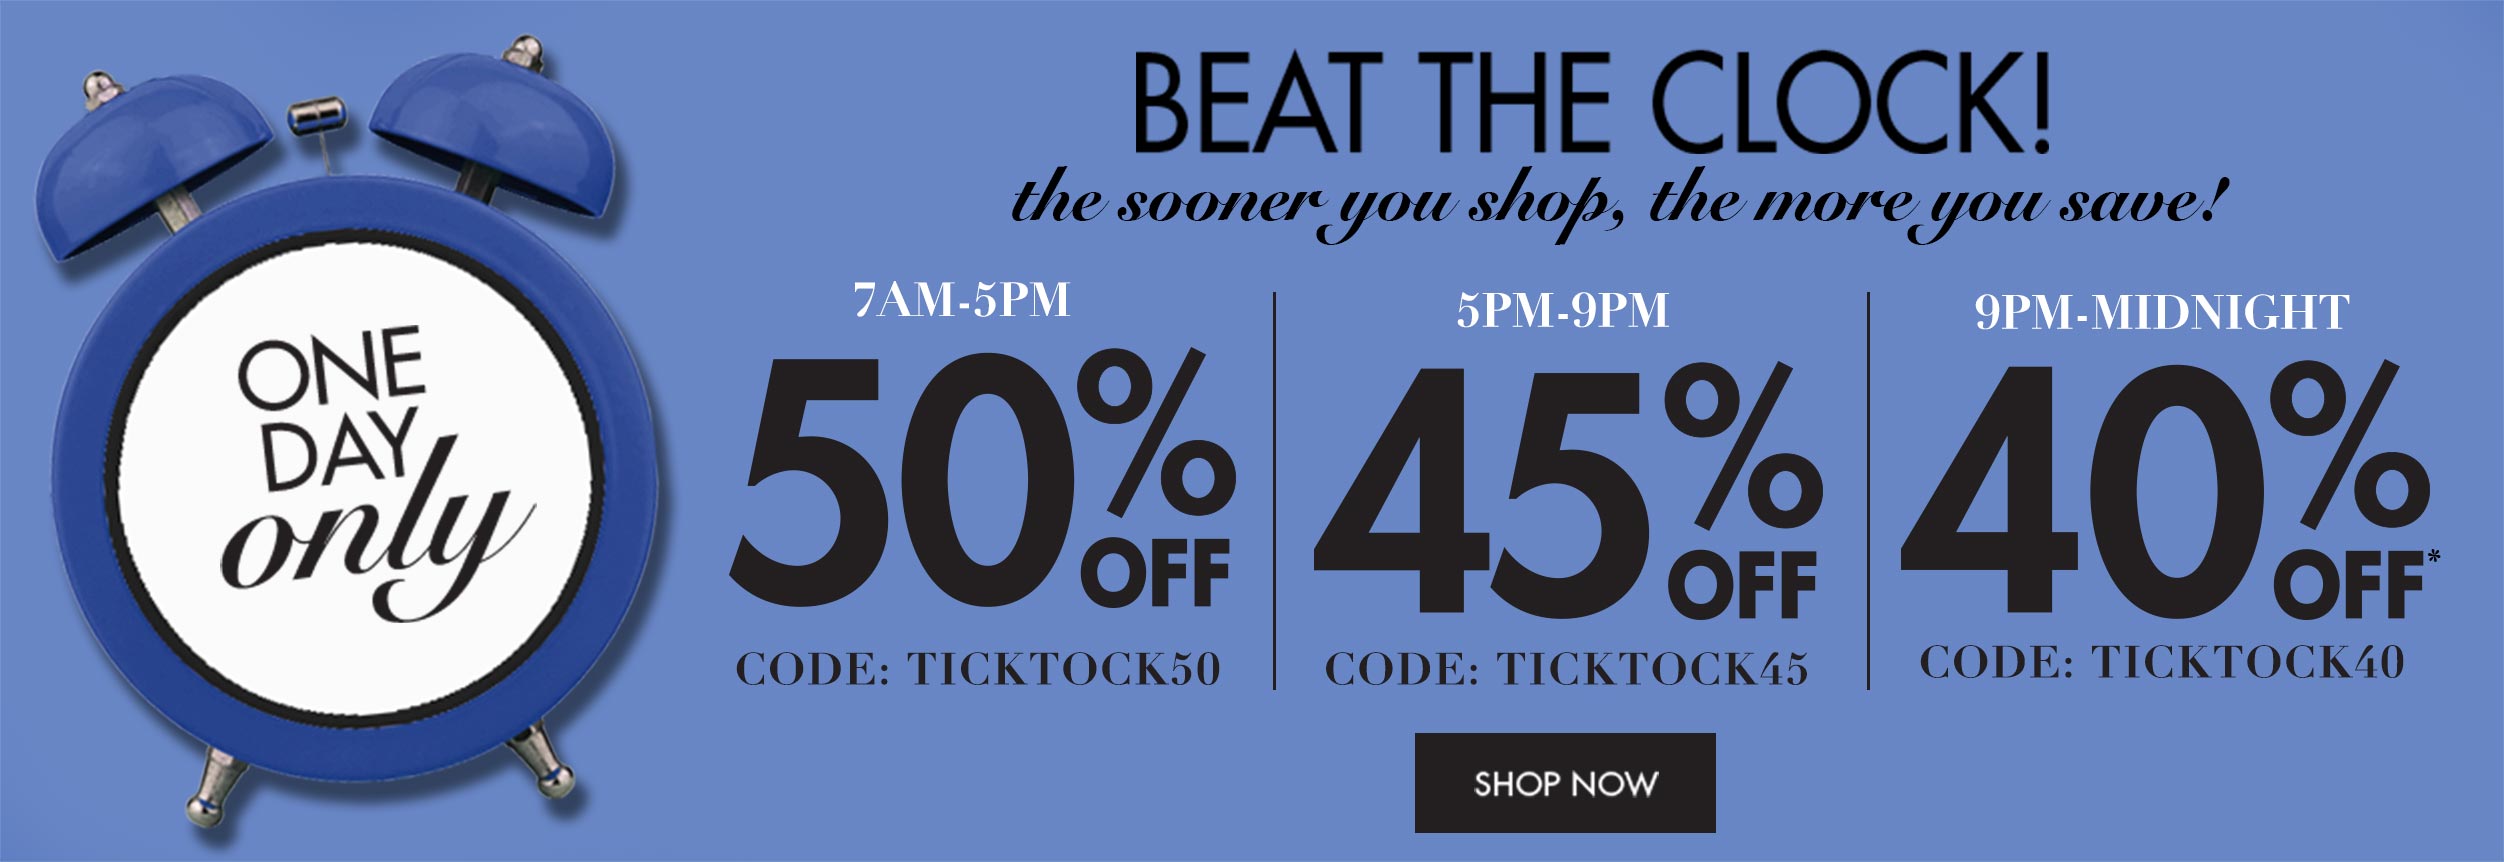 Beat the clock! 7am-5pm 50% off use code TICKTOCK50|5pm-9pm 45% off use code TICKTOCK45| 9pm-midnight 40% off use code TICKTOCK40 - shop now